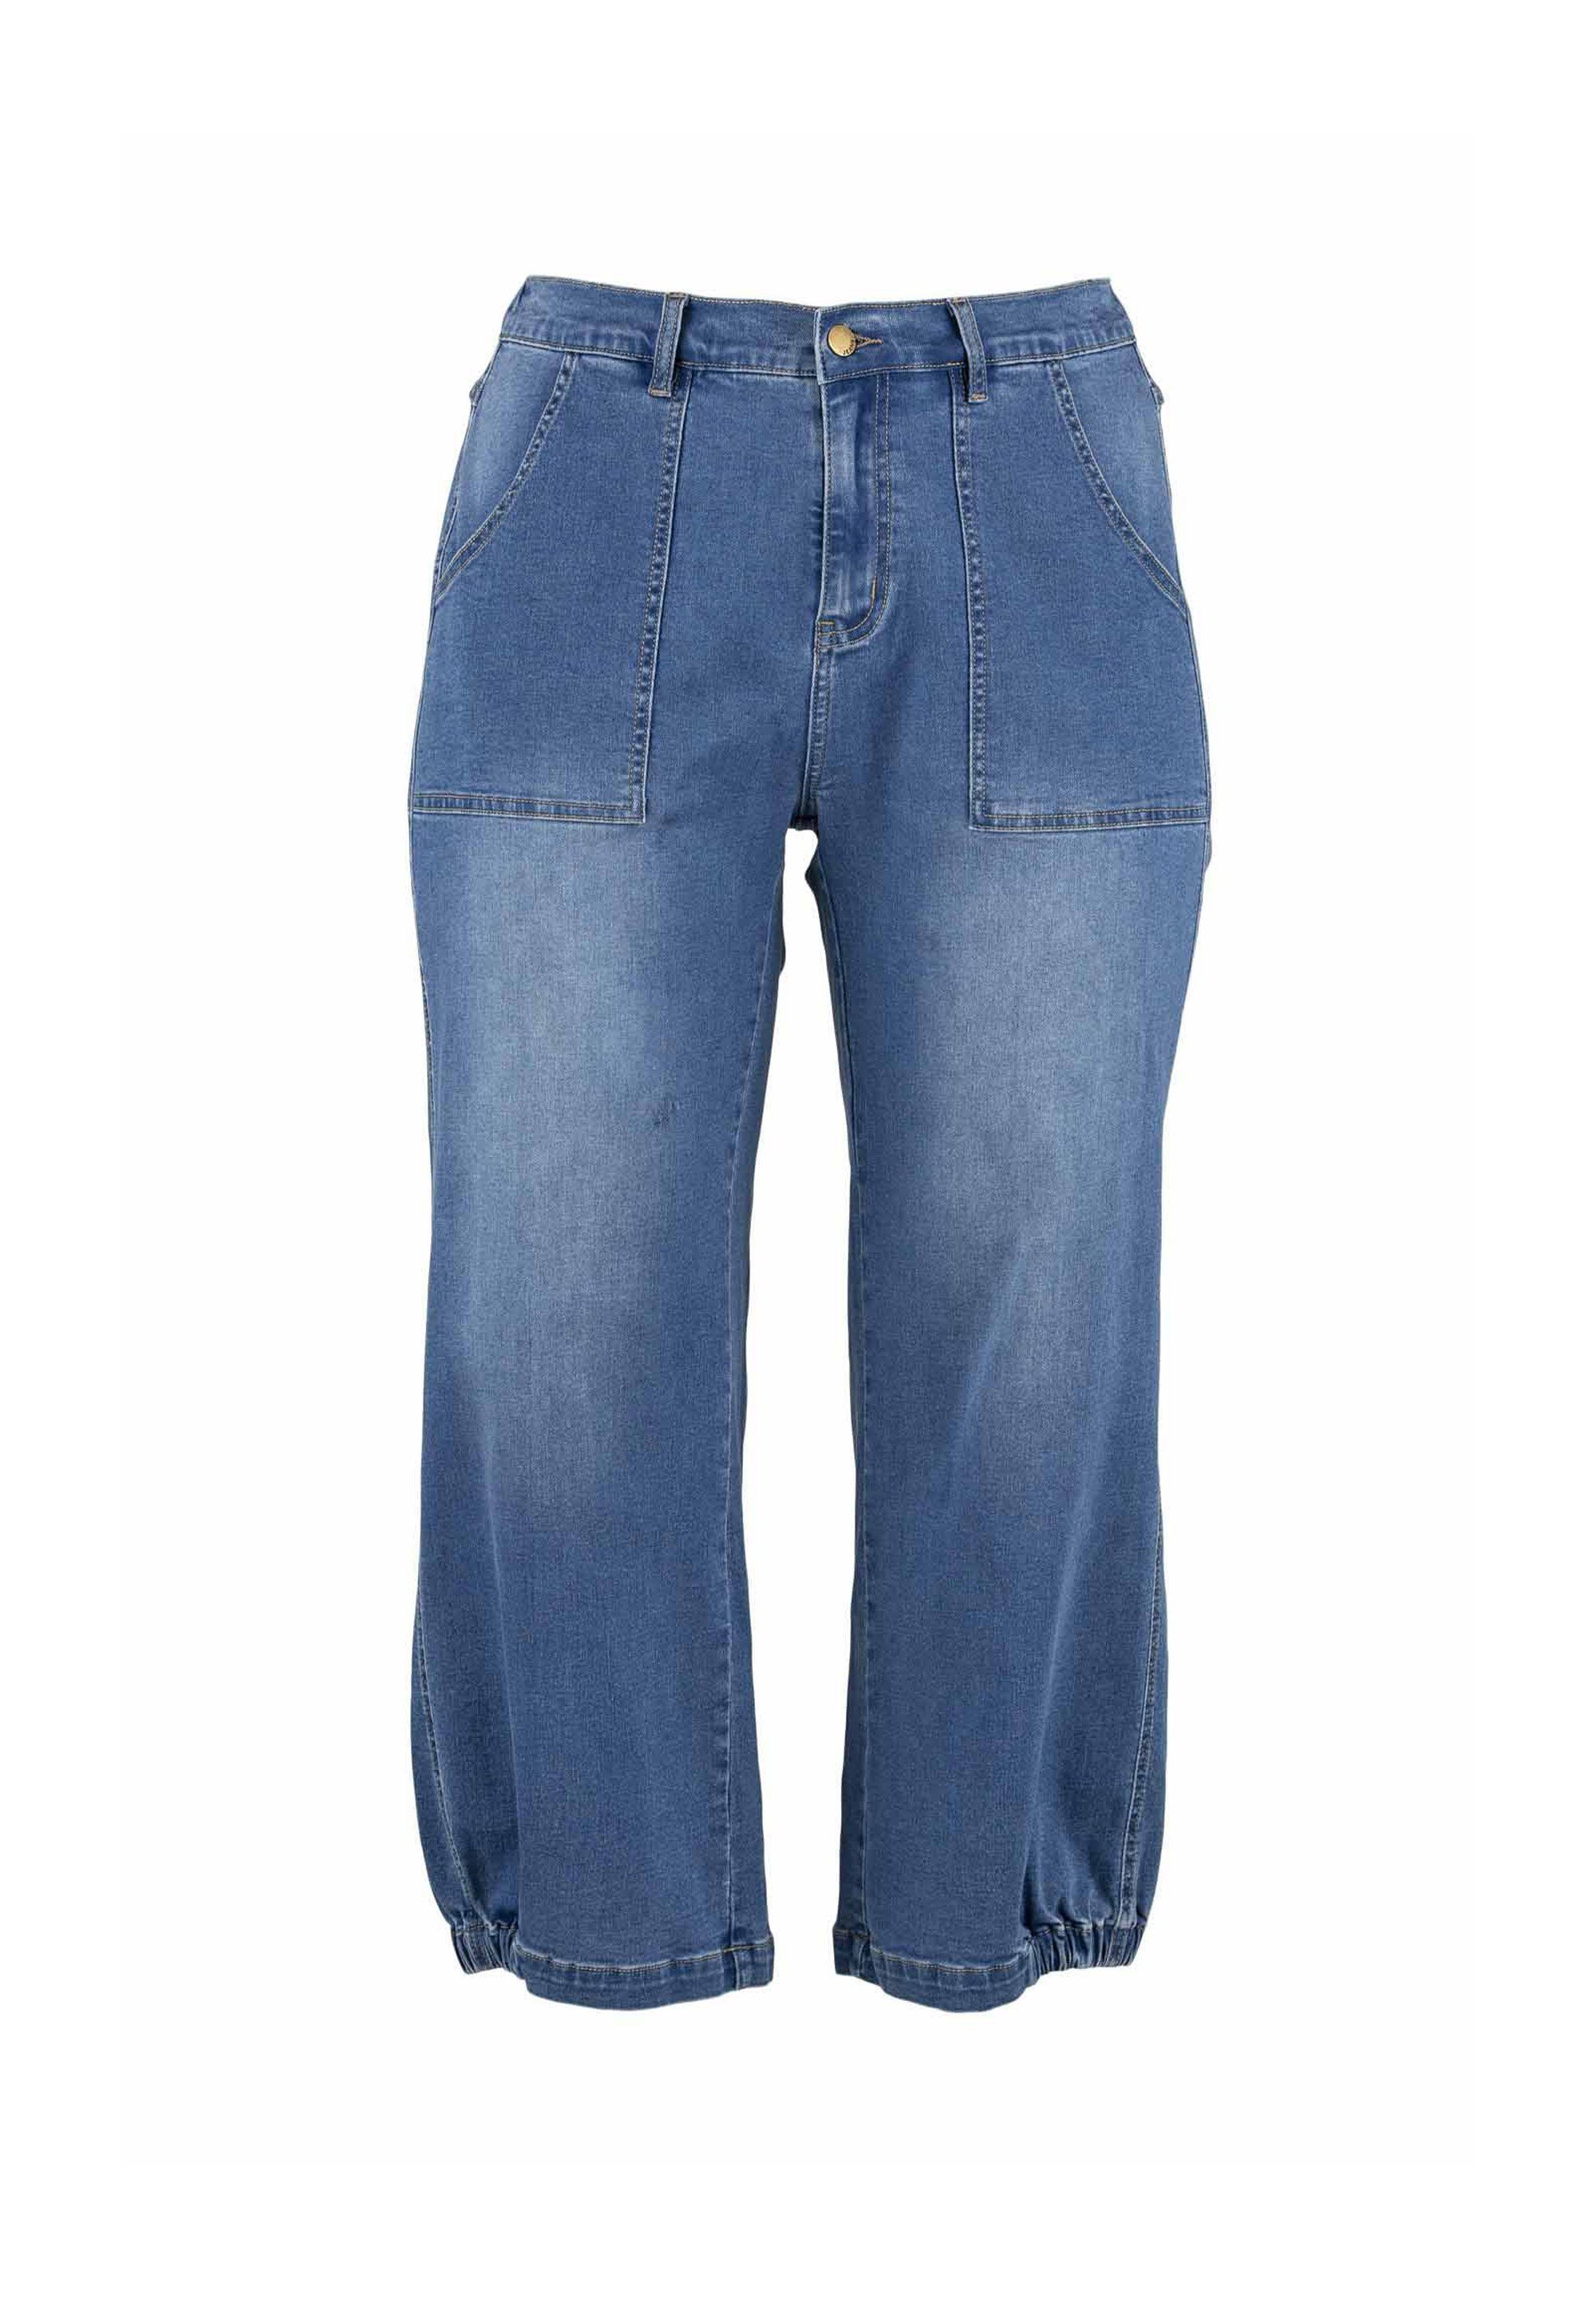 GOZZIP 3/4-Jeans Clara Light Danish blue denim design